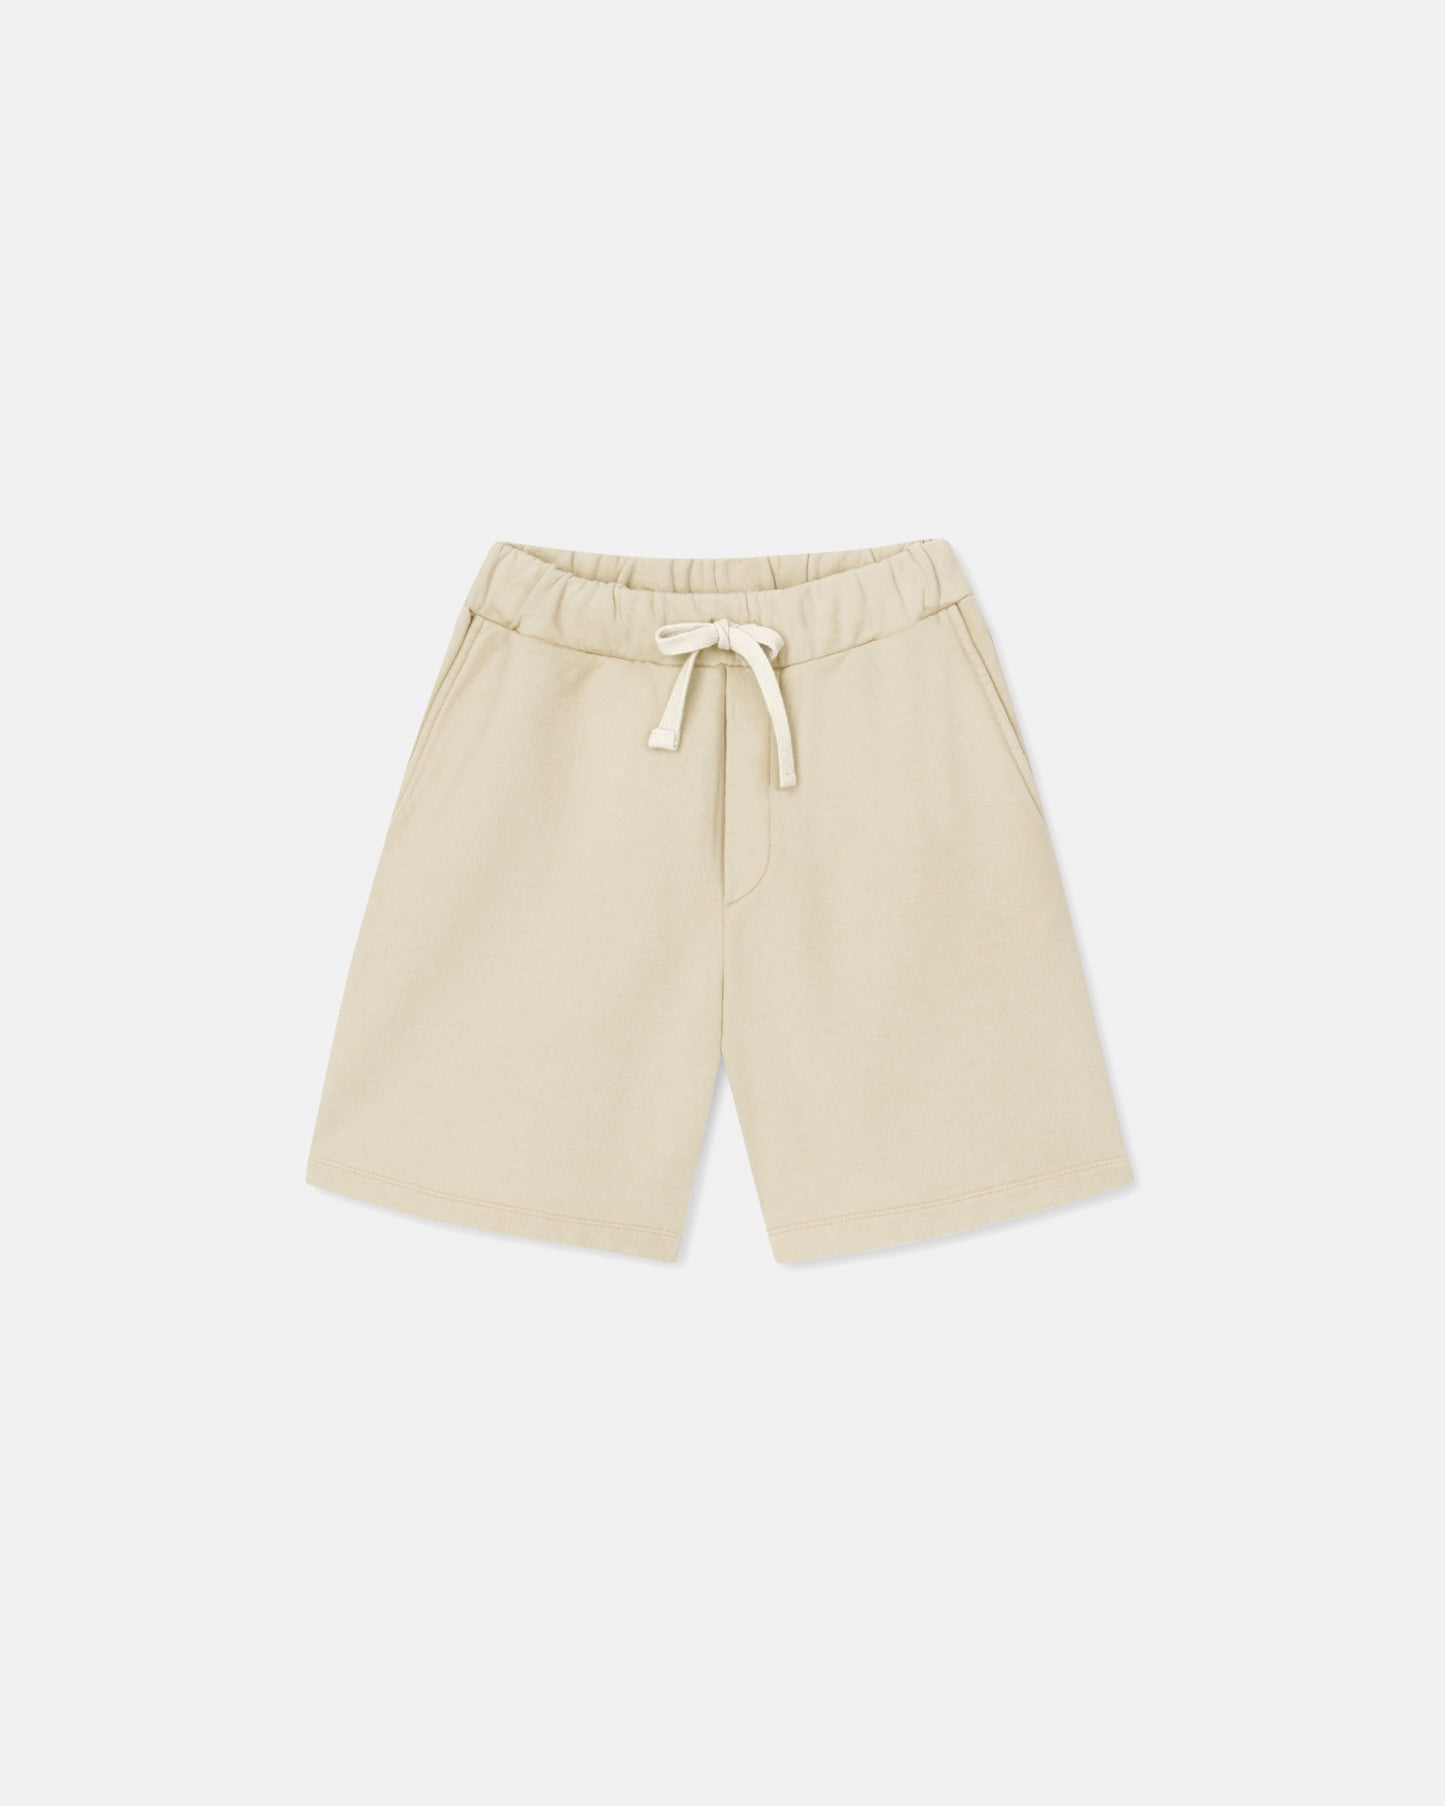 Doxxi - Organically Grown Cotton Shorts - Shell Symbol